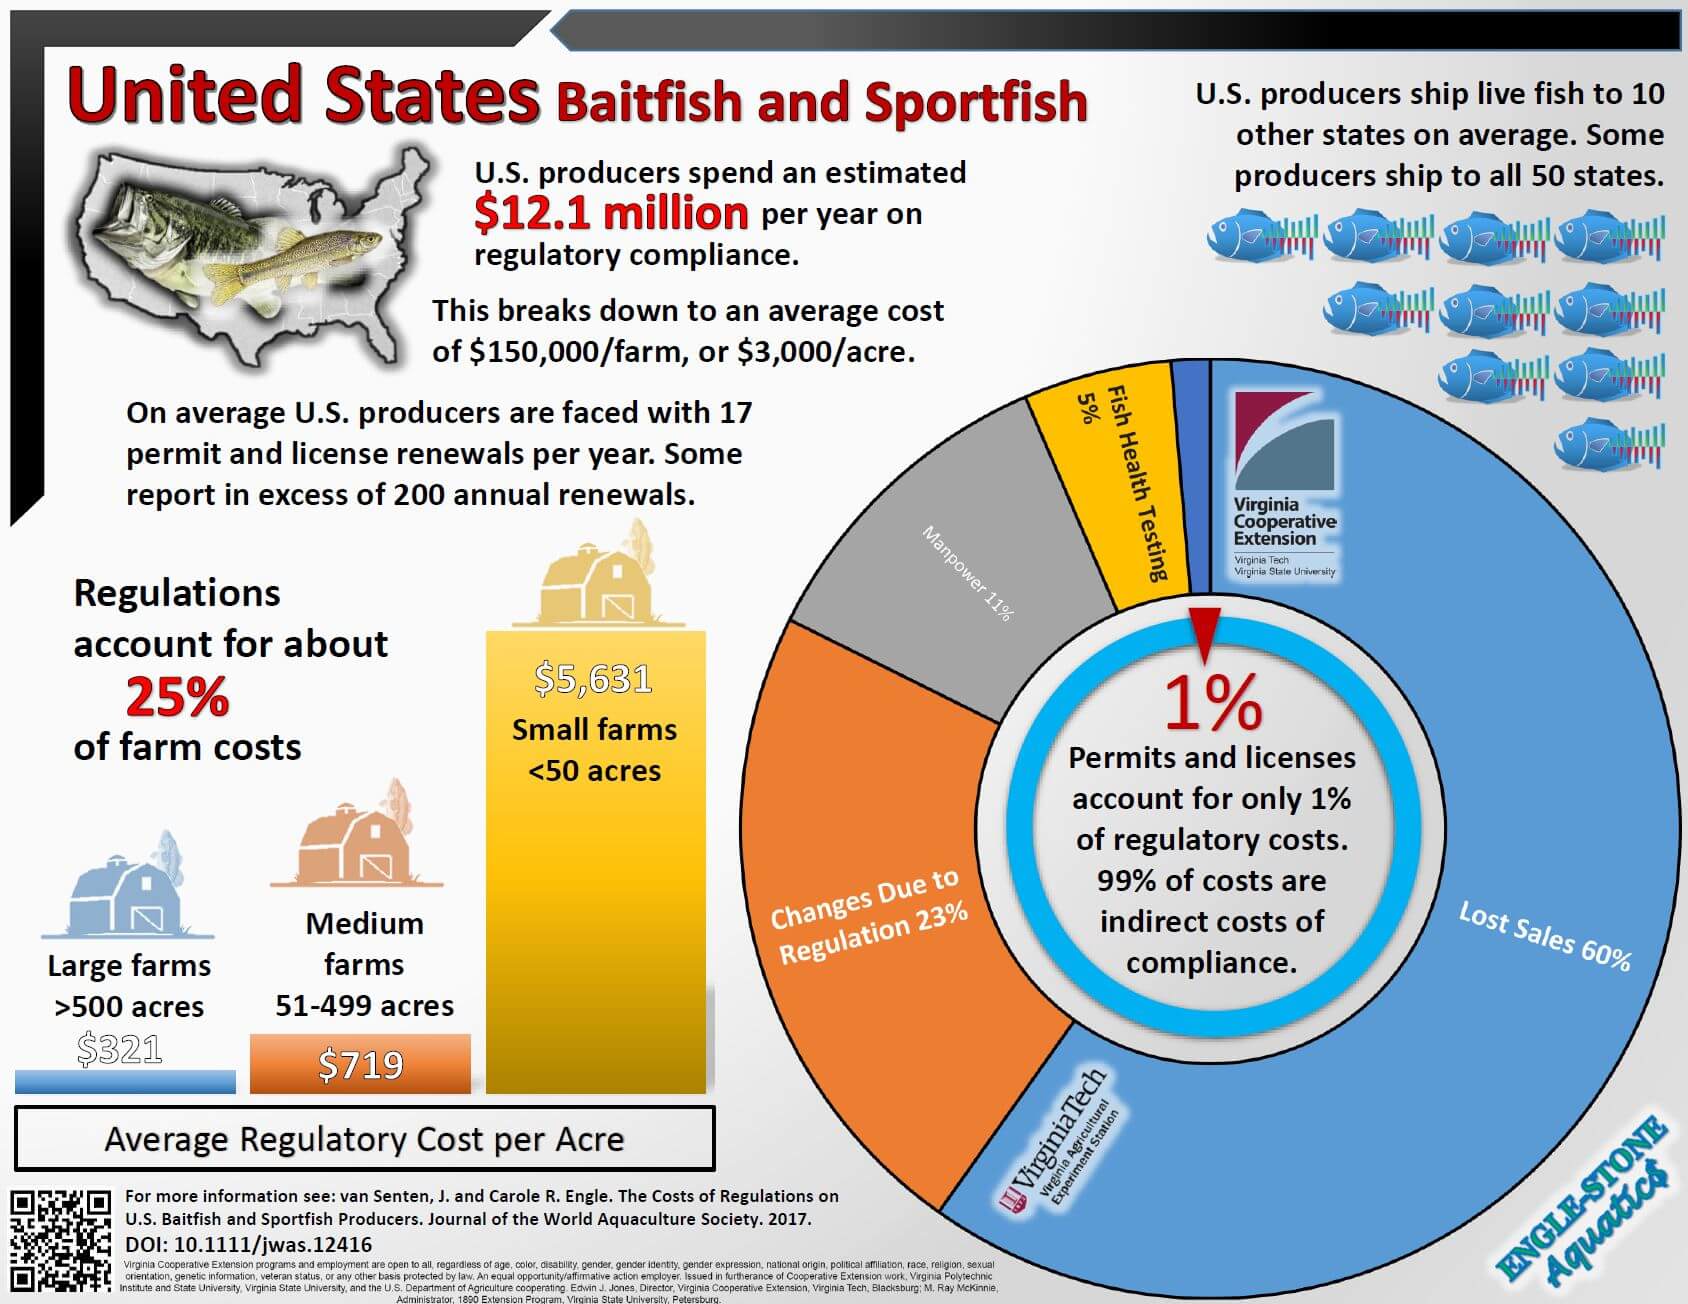 cost of regulations on U.S. baitfish and sportfish